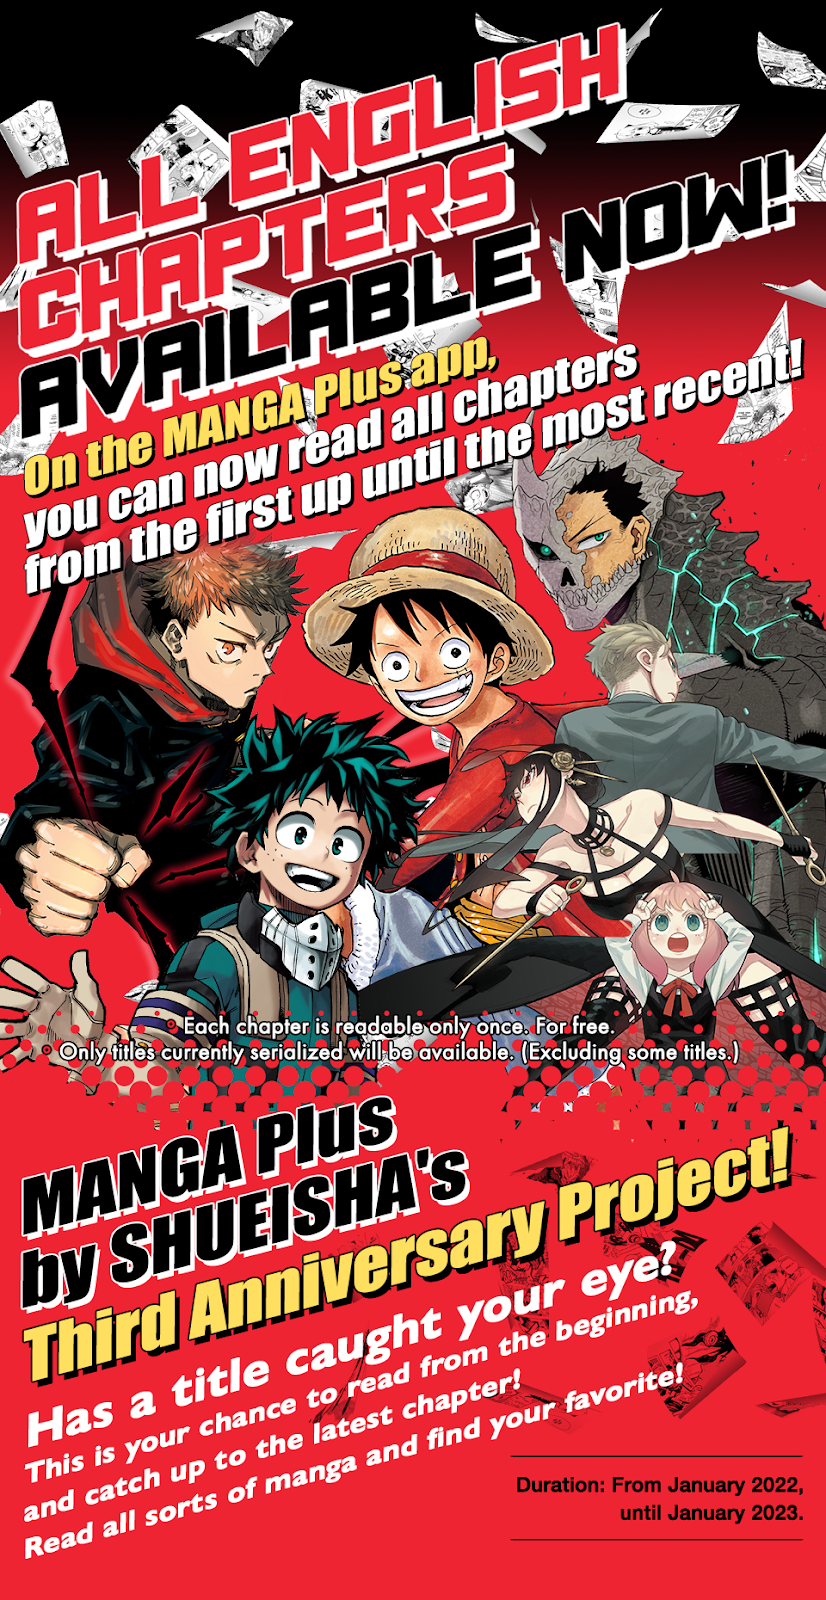 fyp #onepiece #manga #popular #mangaplus